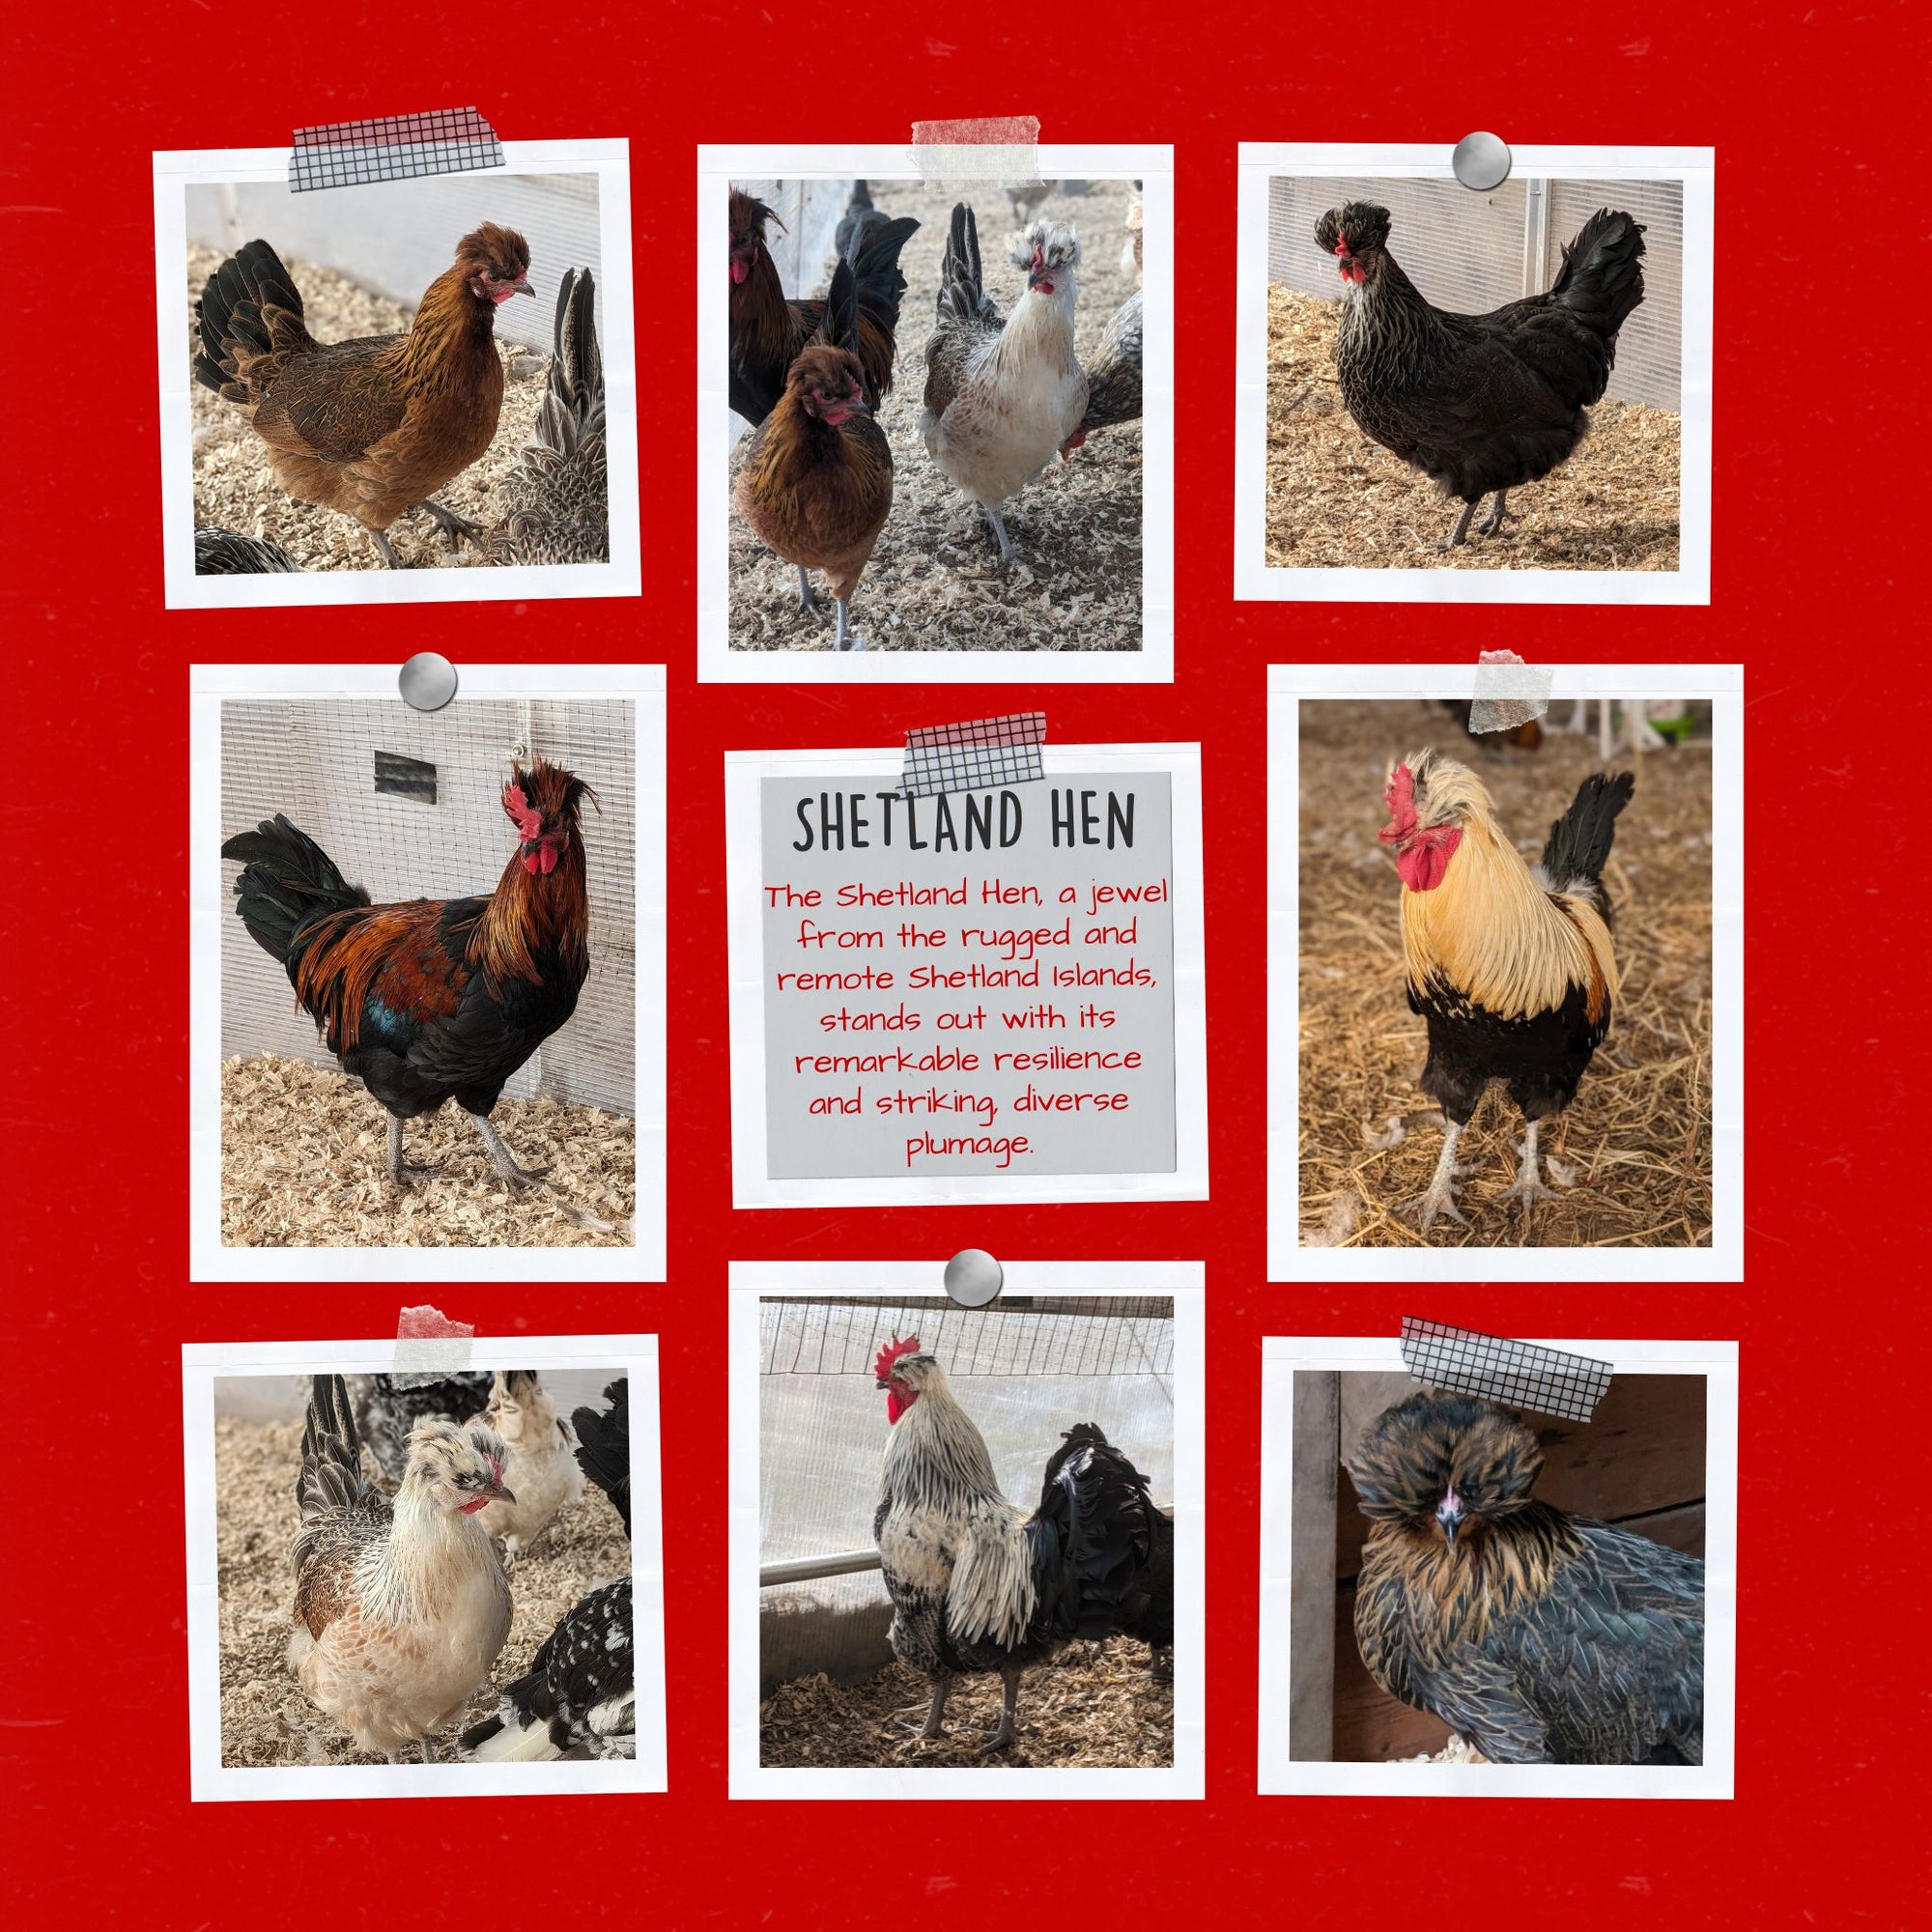 Shetland Hen Chicken Hatching Eggs - Cluck It All Farms